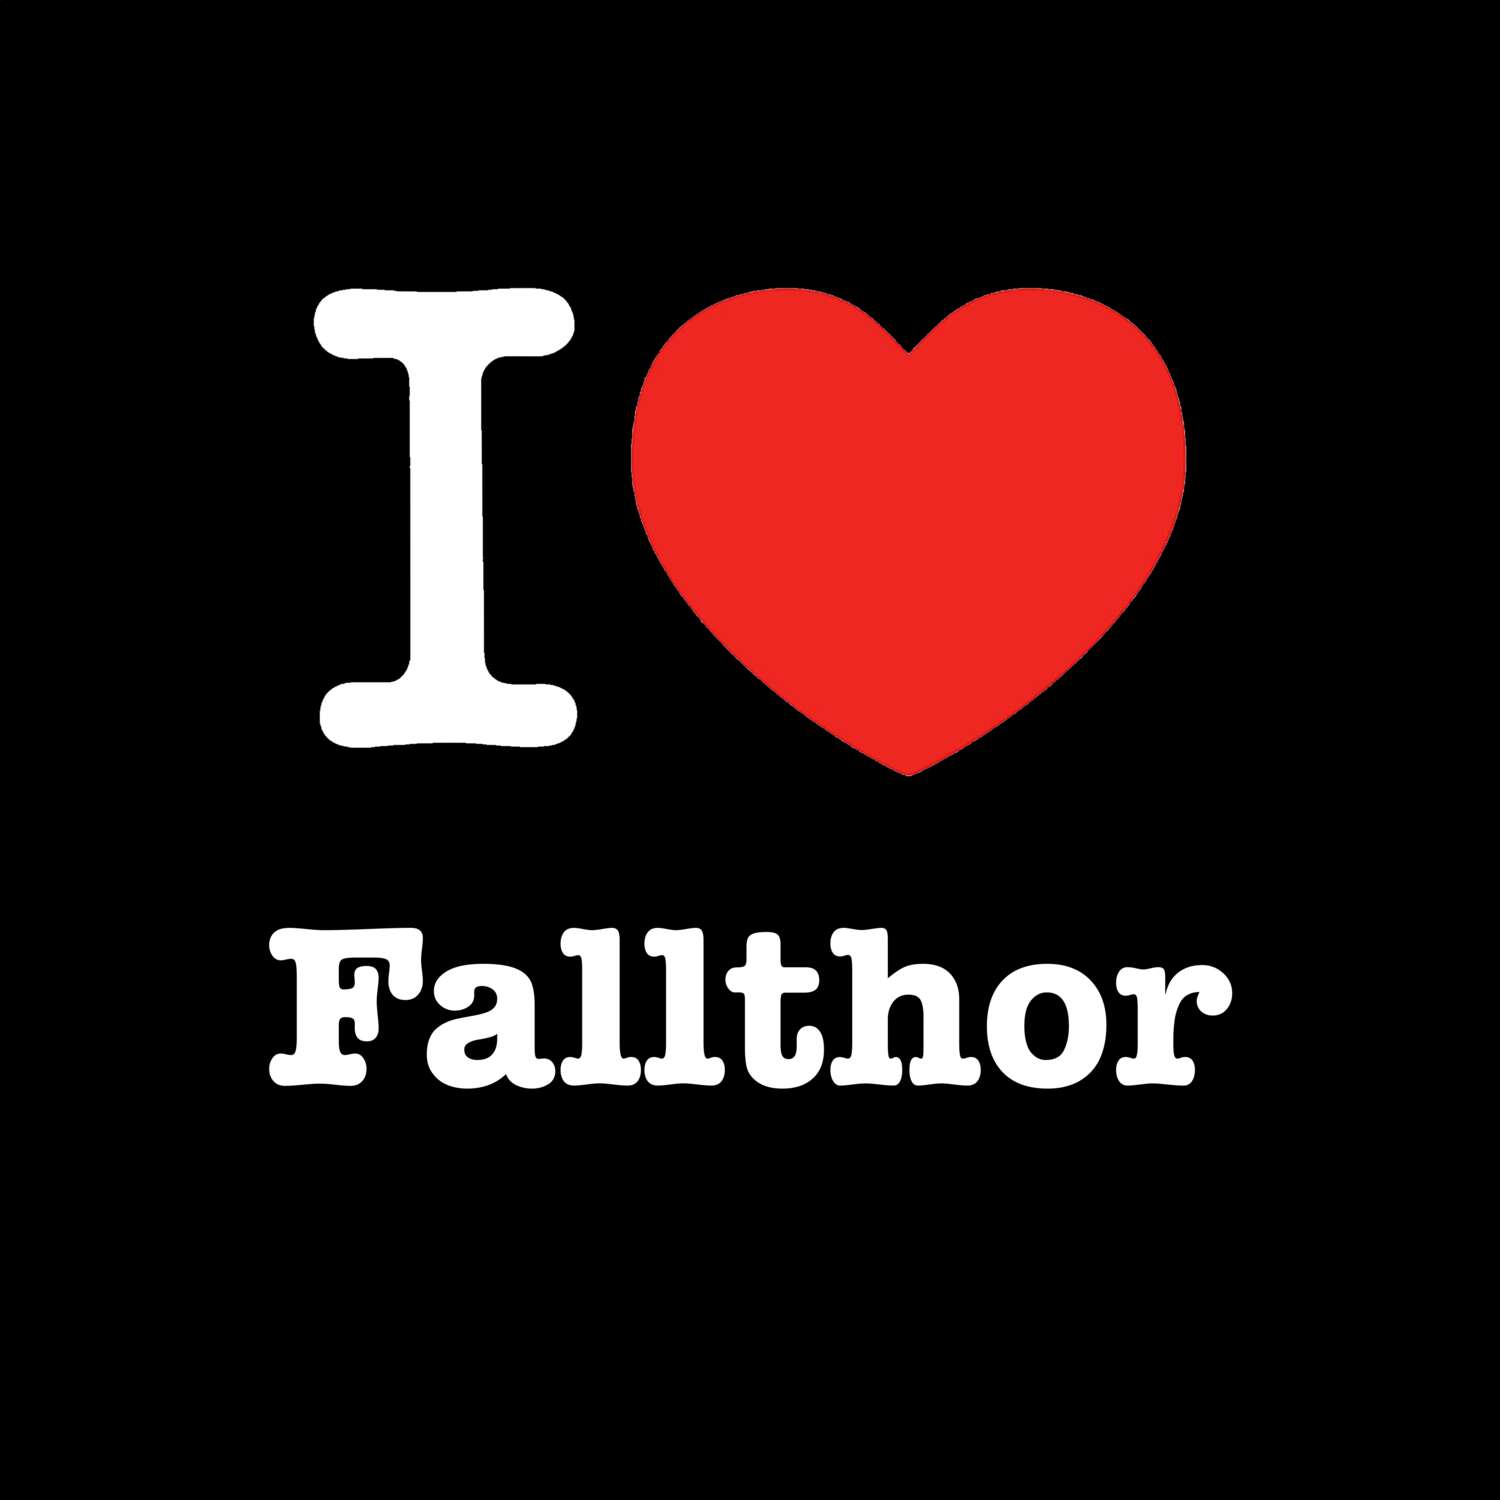 Fallthor T-Shirt »I love«